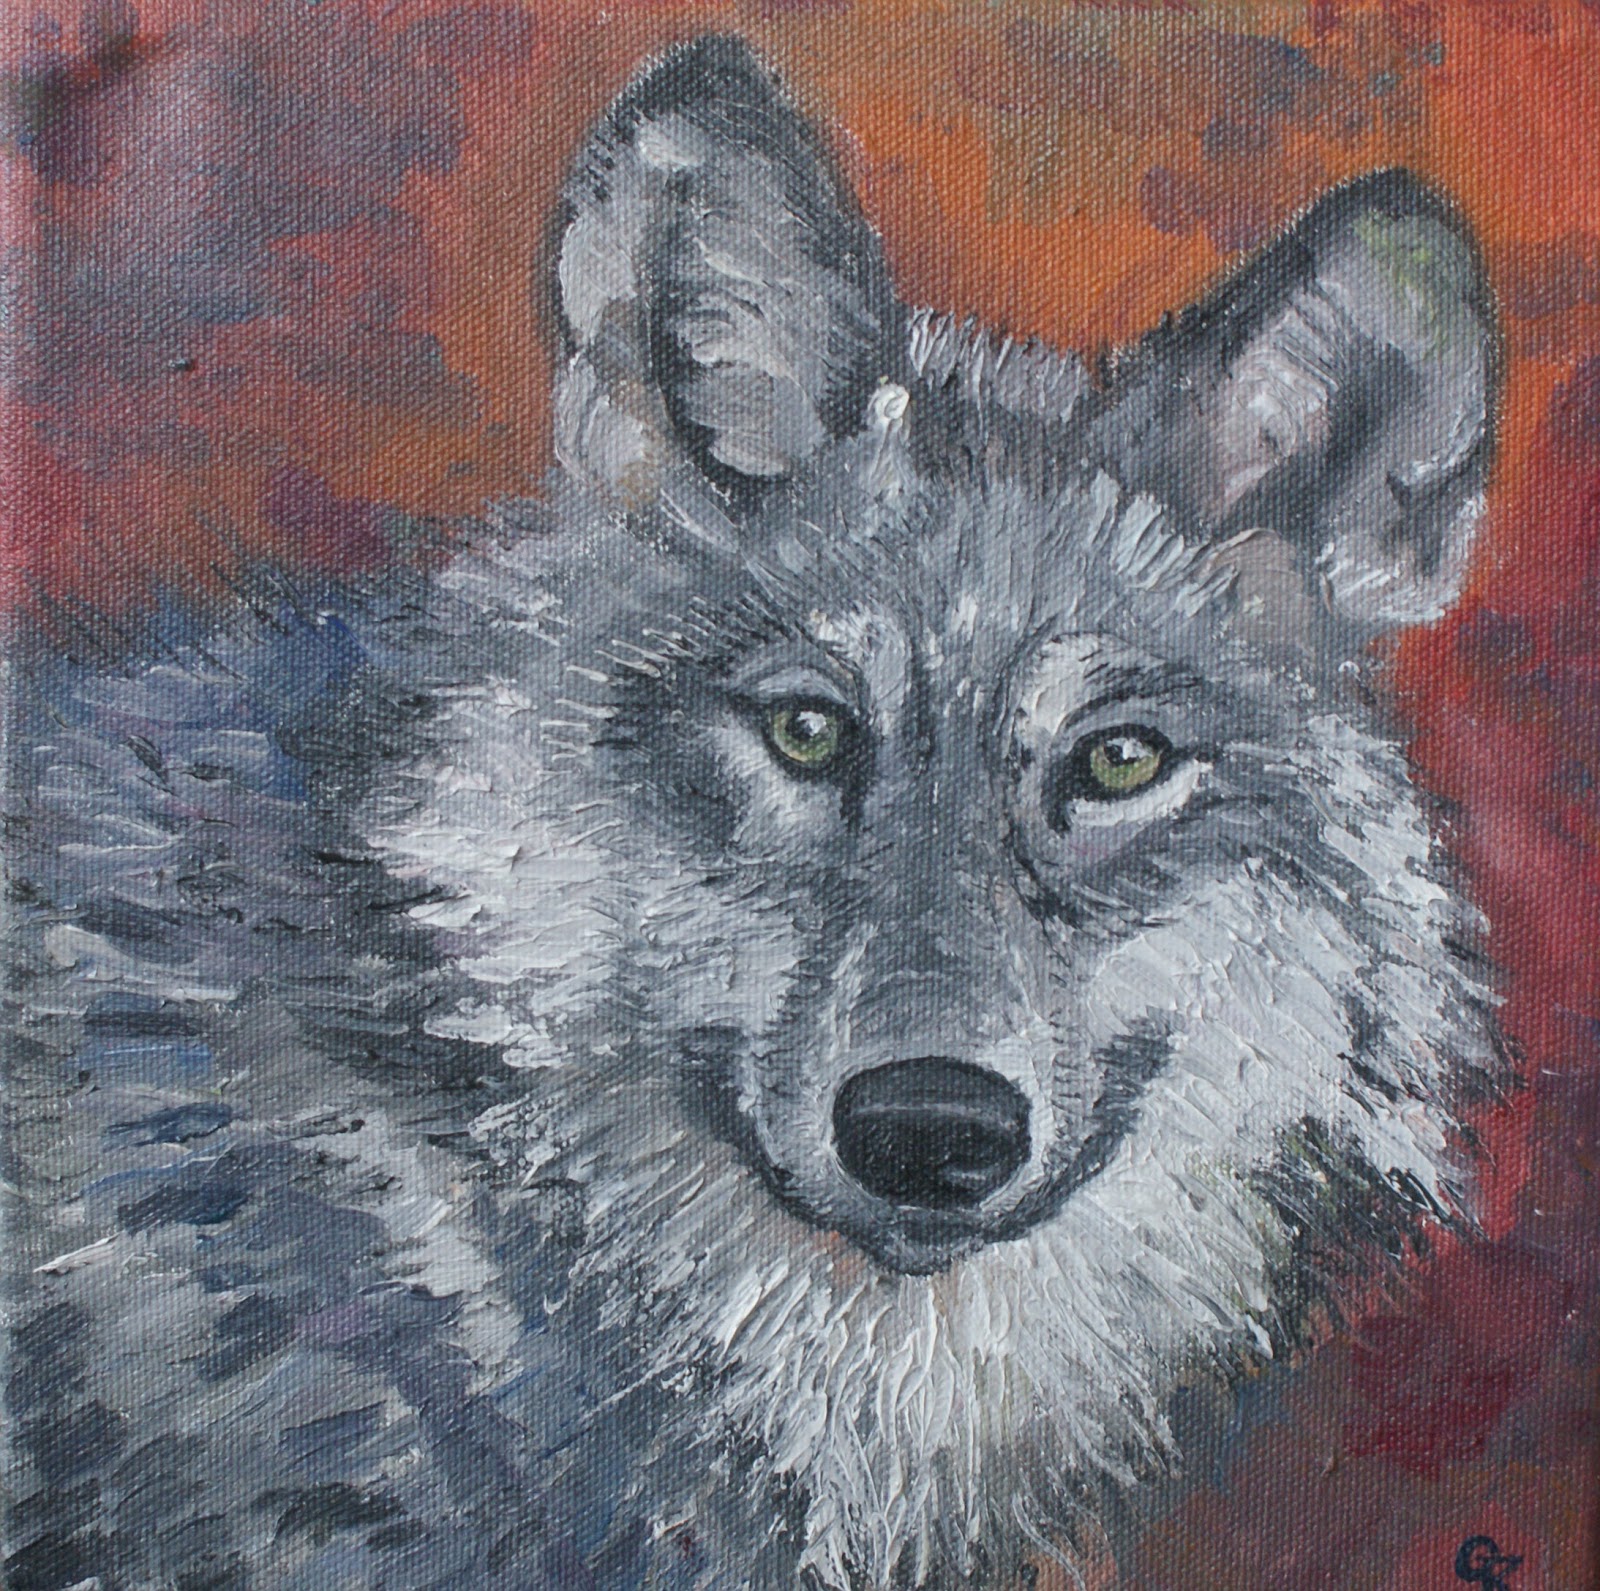 Описание картины серый волк. Маккензи Миэн волк. Волк гуашью. Волк рисунок гуашью. Волк нарисованный гуашью.